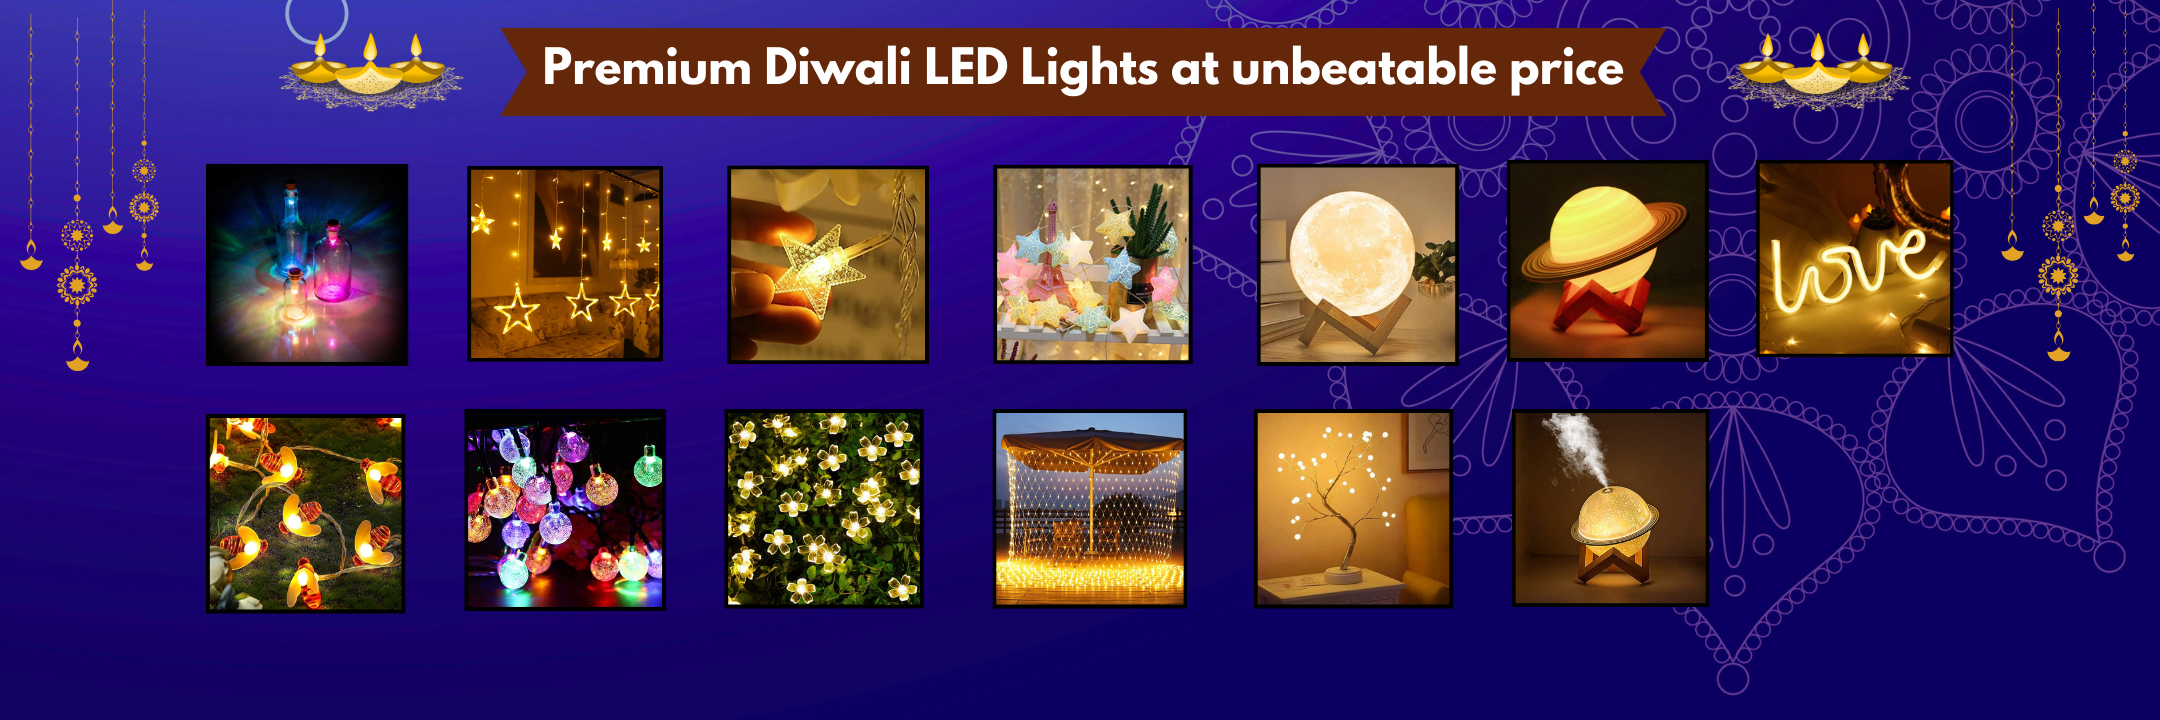 Diwali LED Lights for Diwali and Home decoration